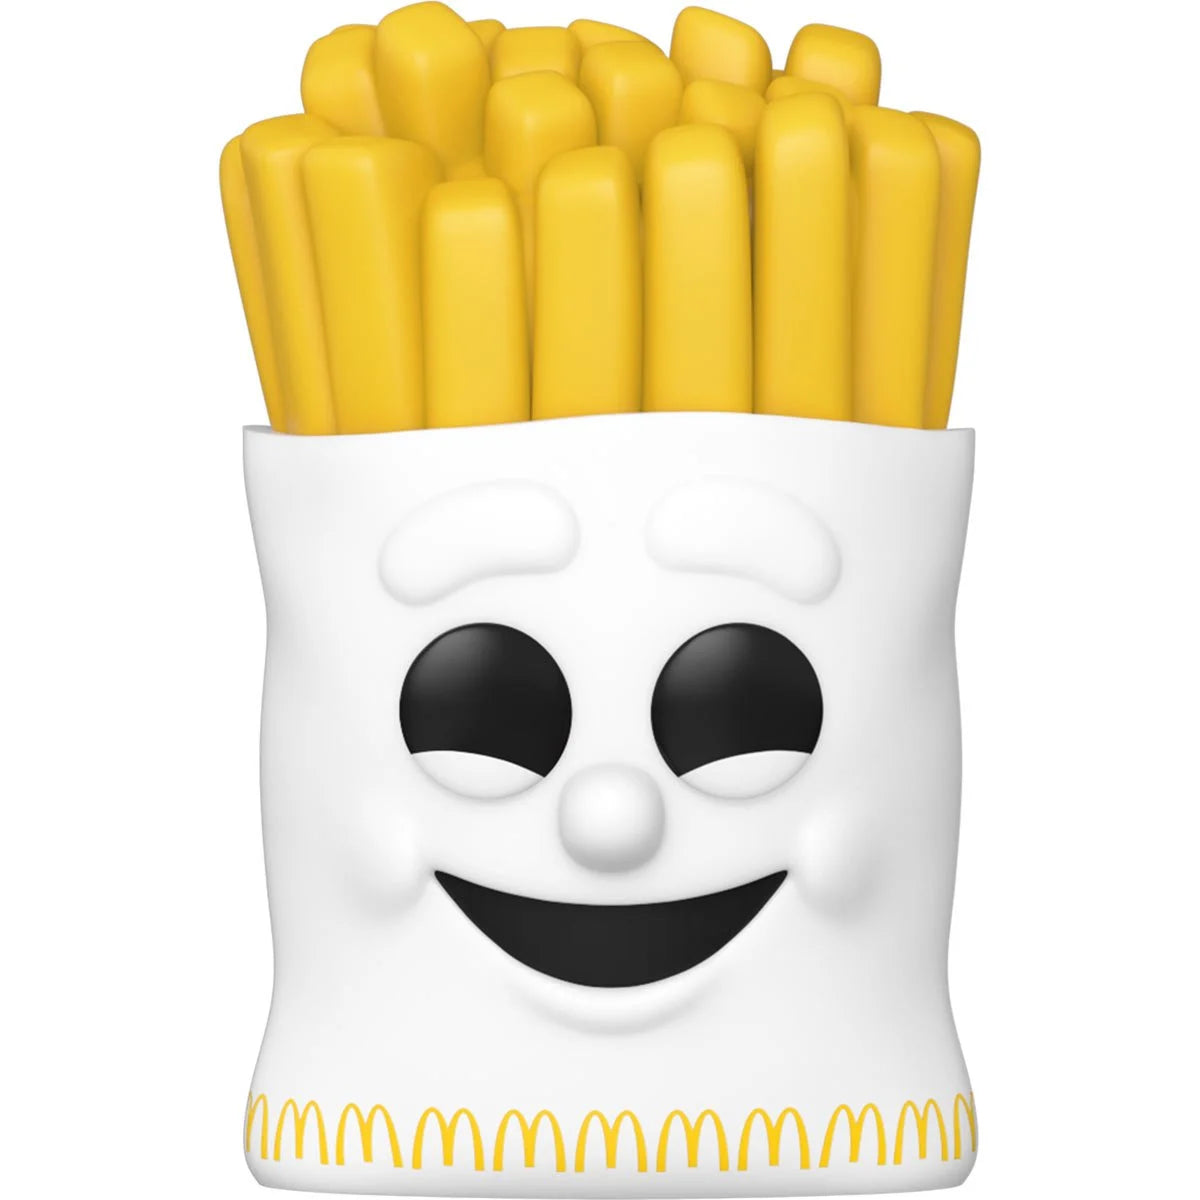 Fries McDonalds FUNKO POP! AD ICONS